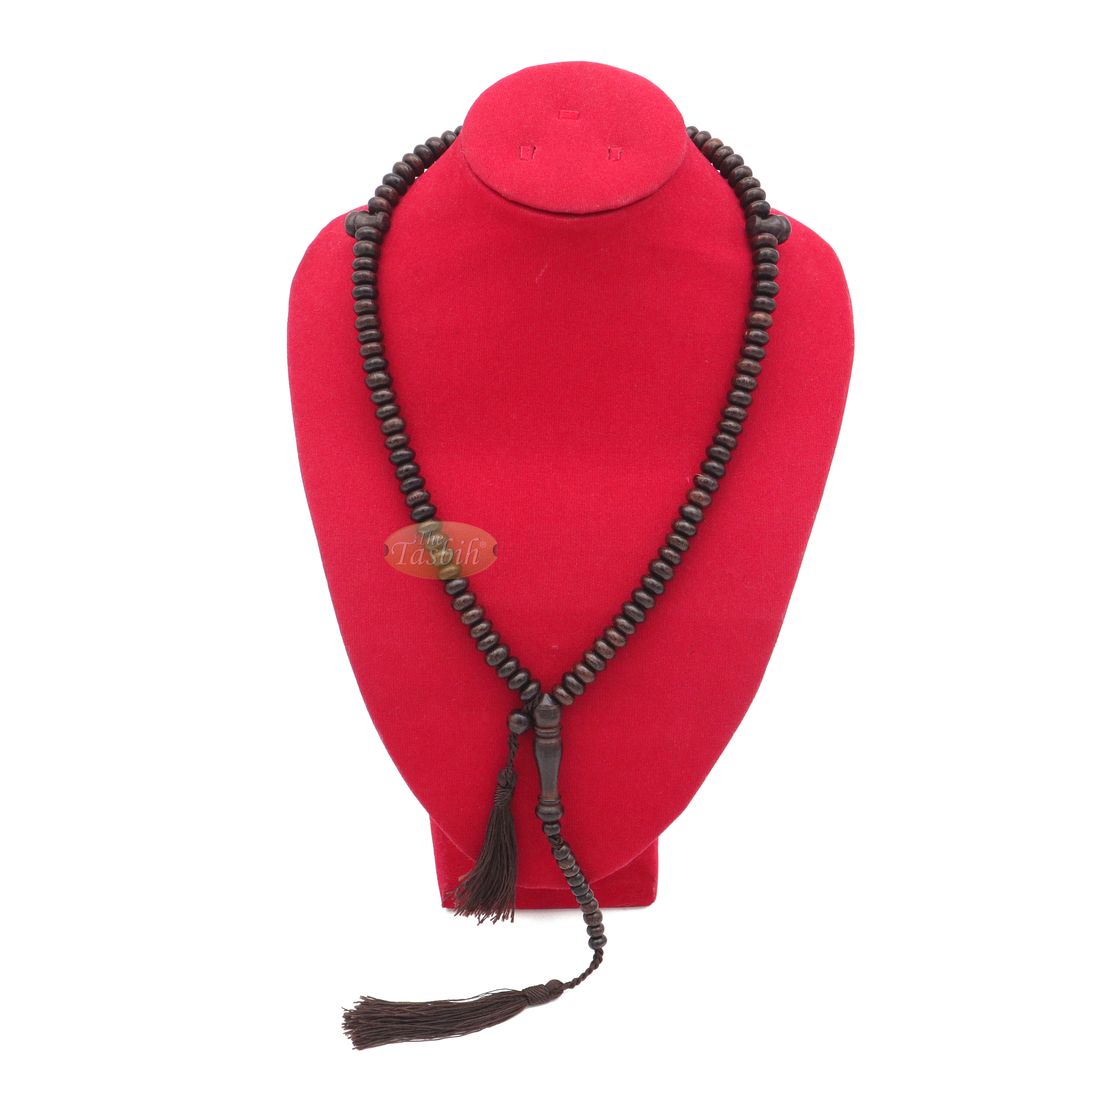 Prayer Beads – 9mm 99-Bead Flat Oval Tamarind Tasbih with Matching Dark Brown Tassels and 10-bead Counter